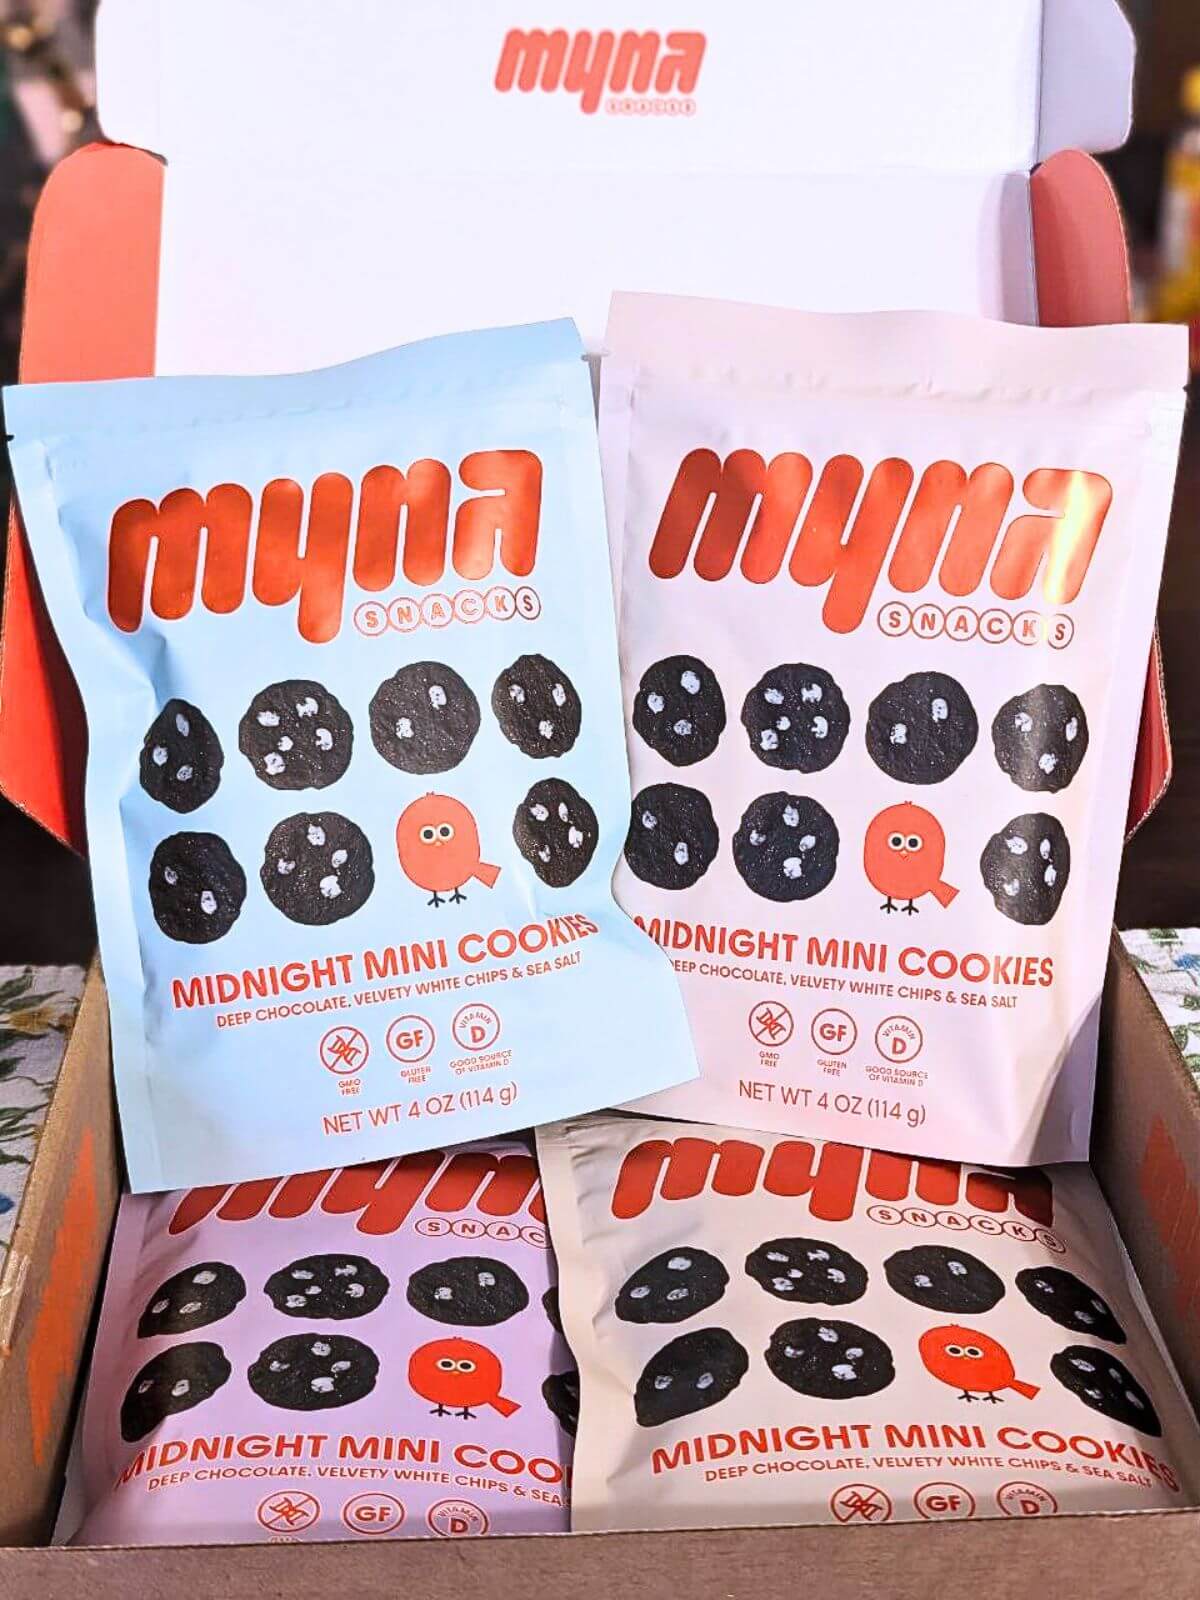 4 bags of Myna Snacks Midnight Mini Cookies in a box.